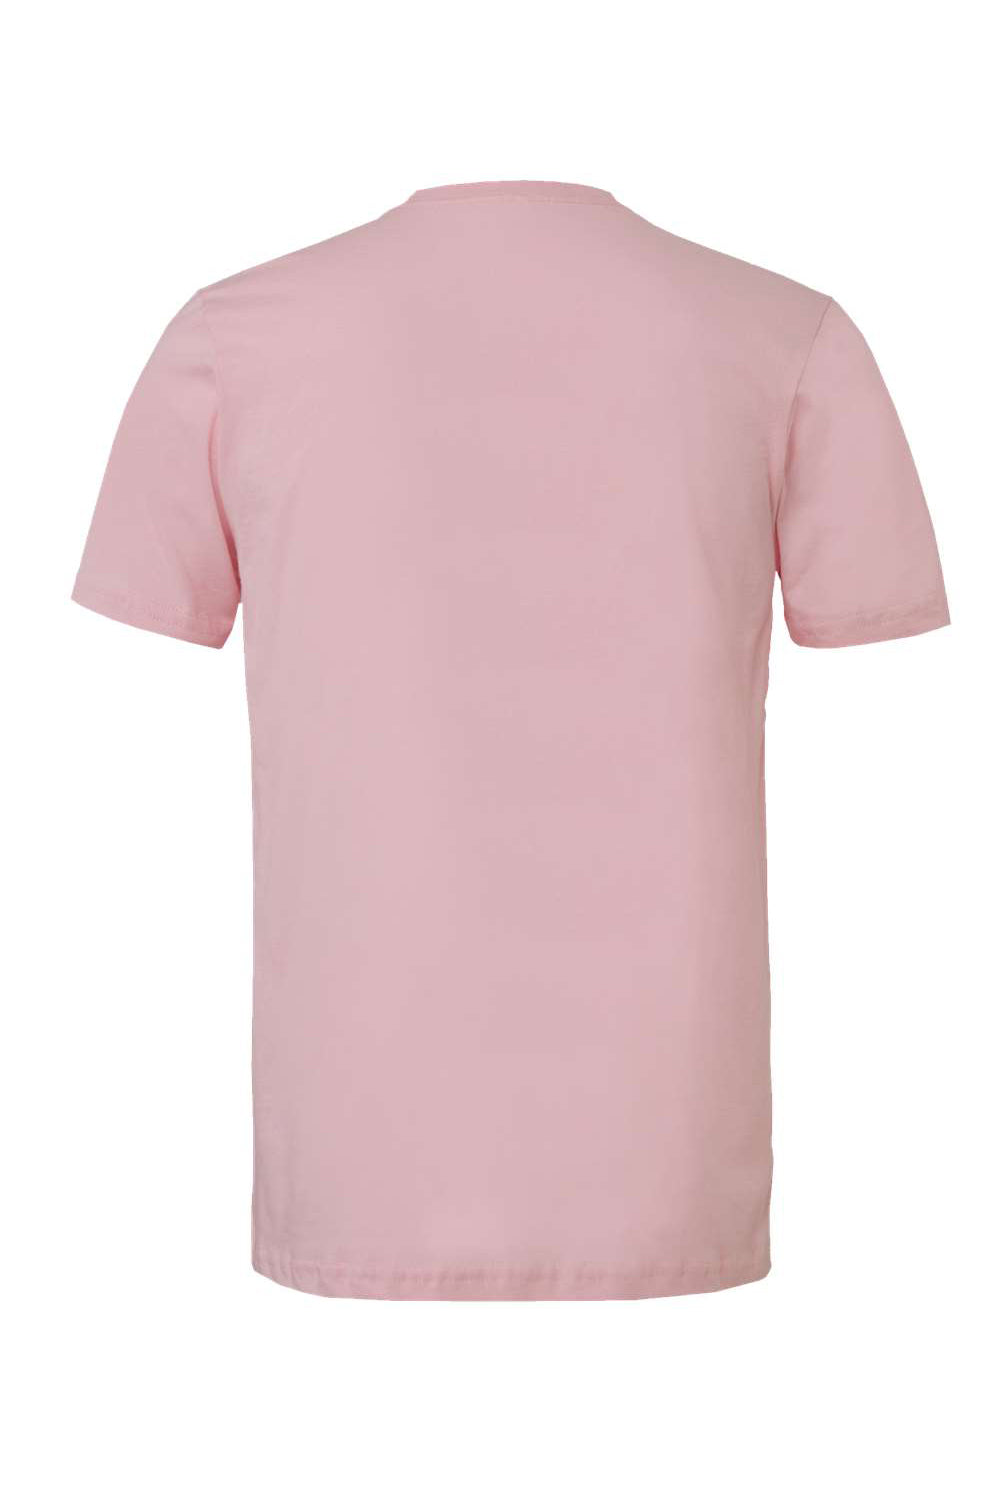 Bella + Canvas BC3001/3001C Mens Jersey Short Sleeve Crewneck T-Shirt Pink Flat Back